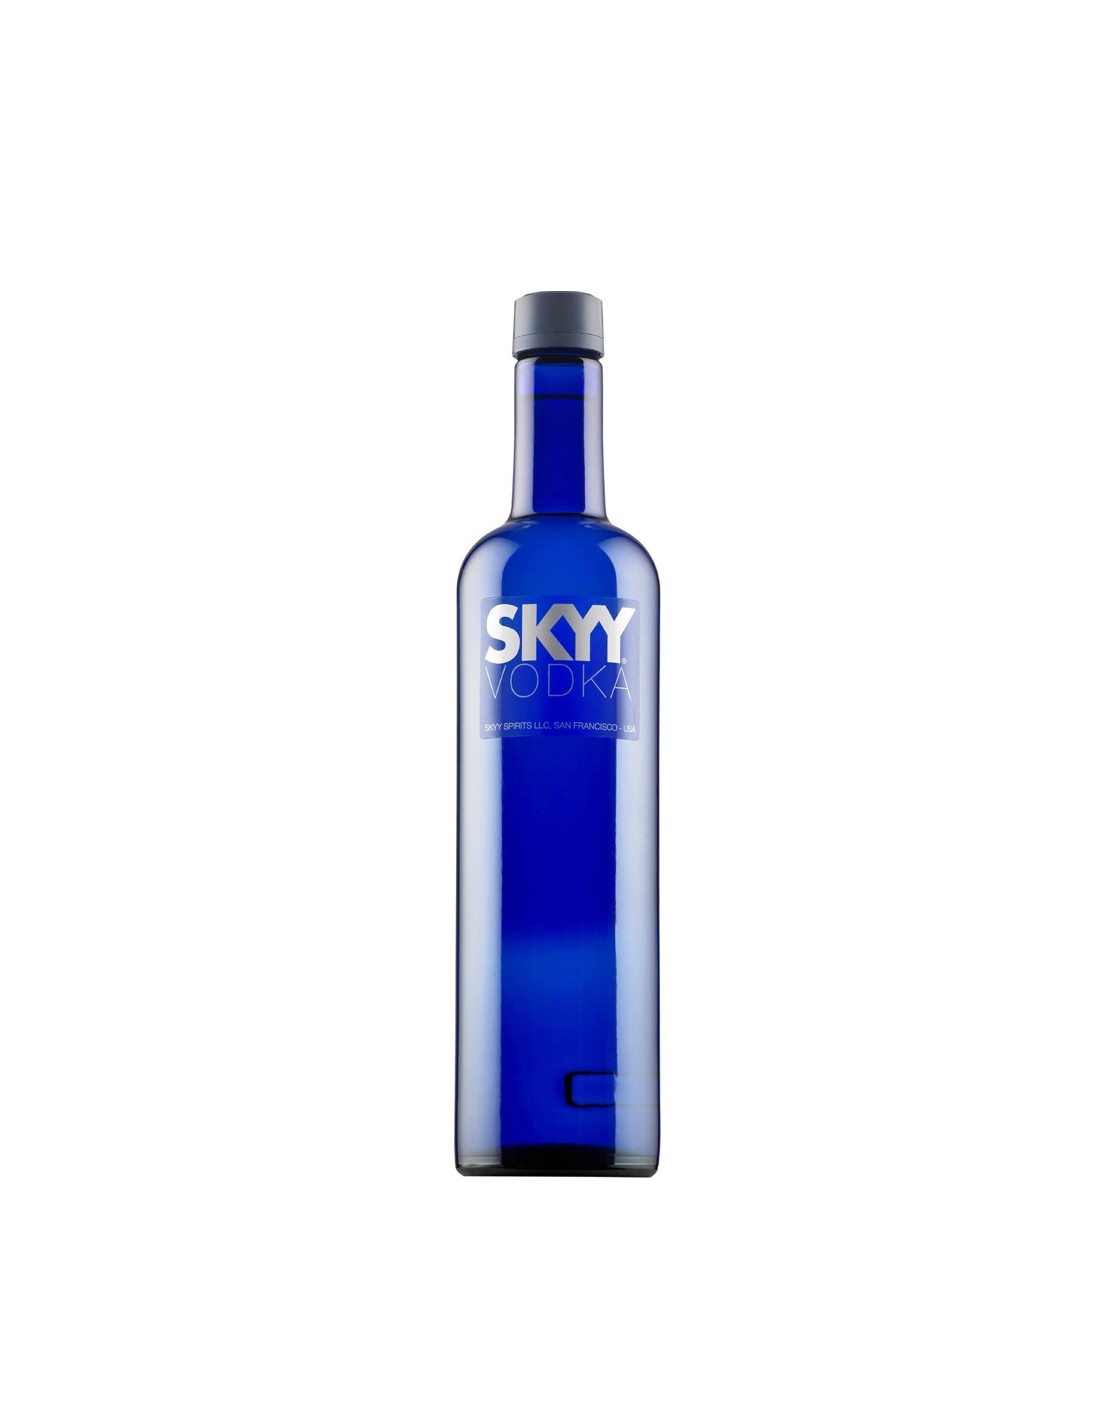 Vodca Skyy 0.7L, 40% alc., America alcooldiscount.ro